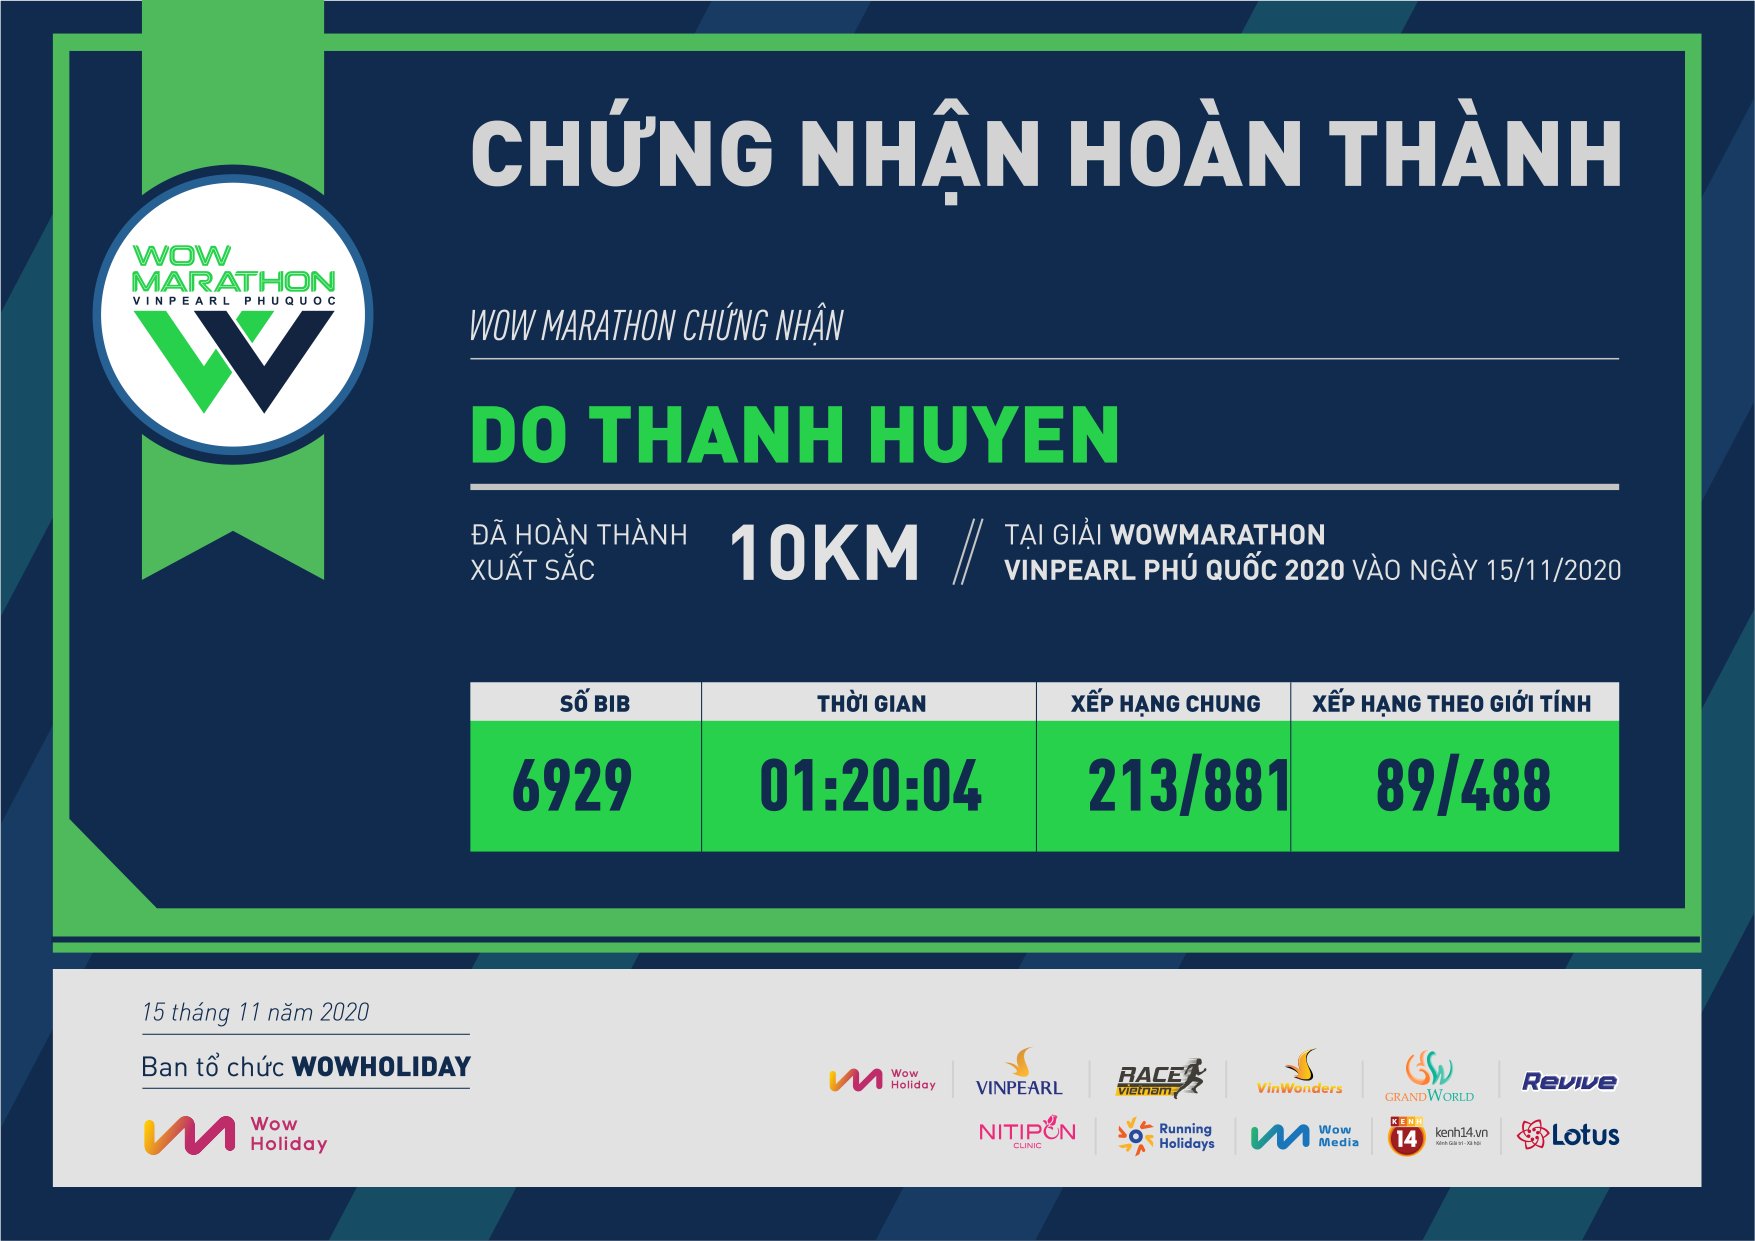 6929 - DO THANH HUYEN